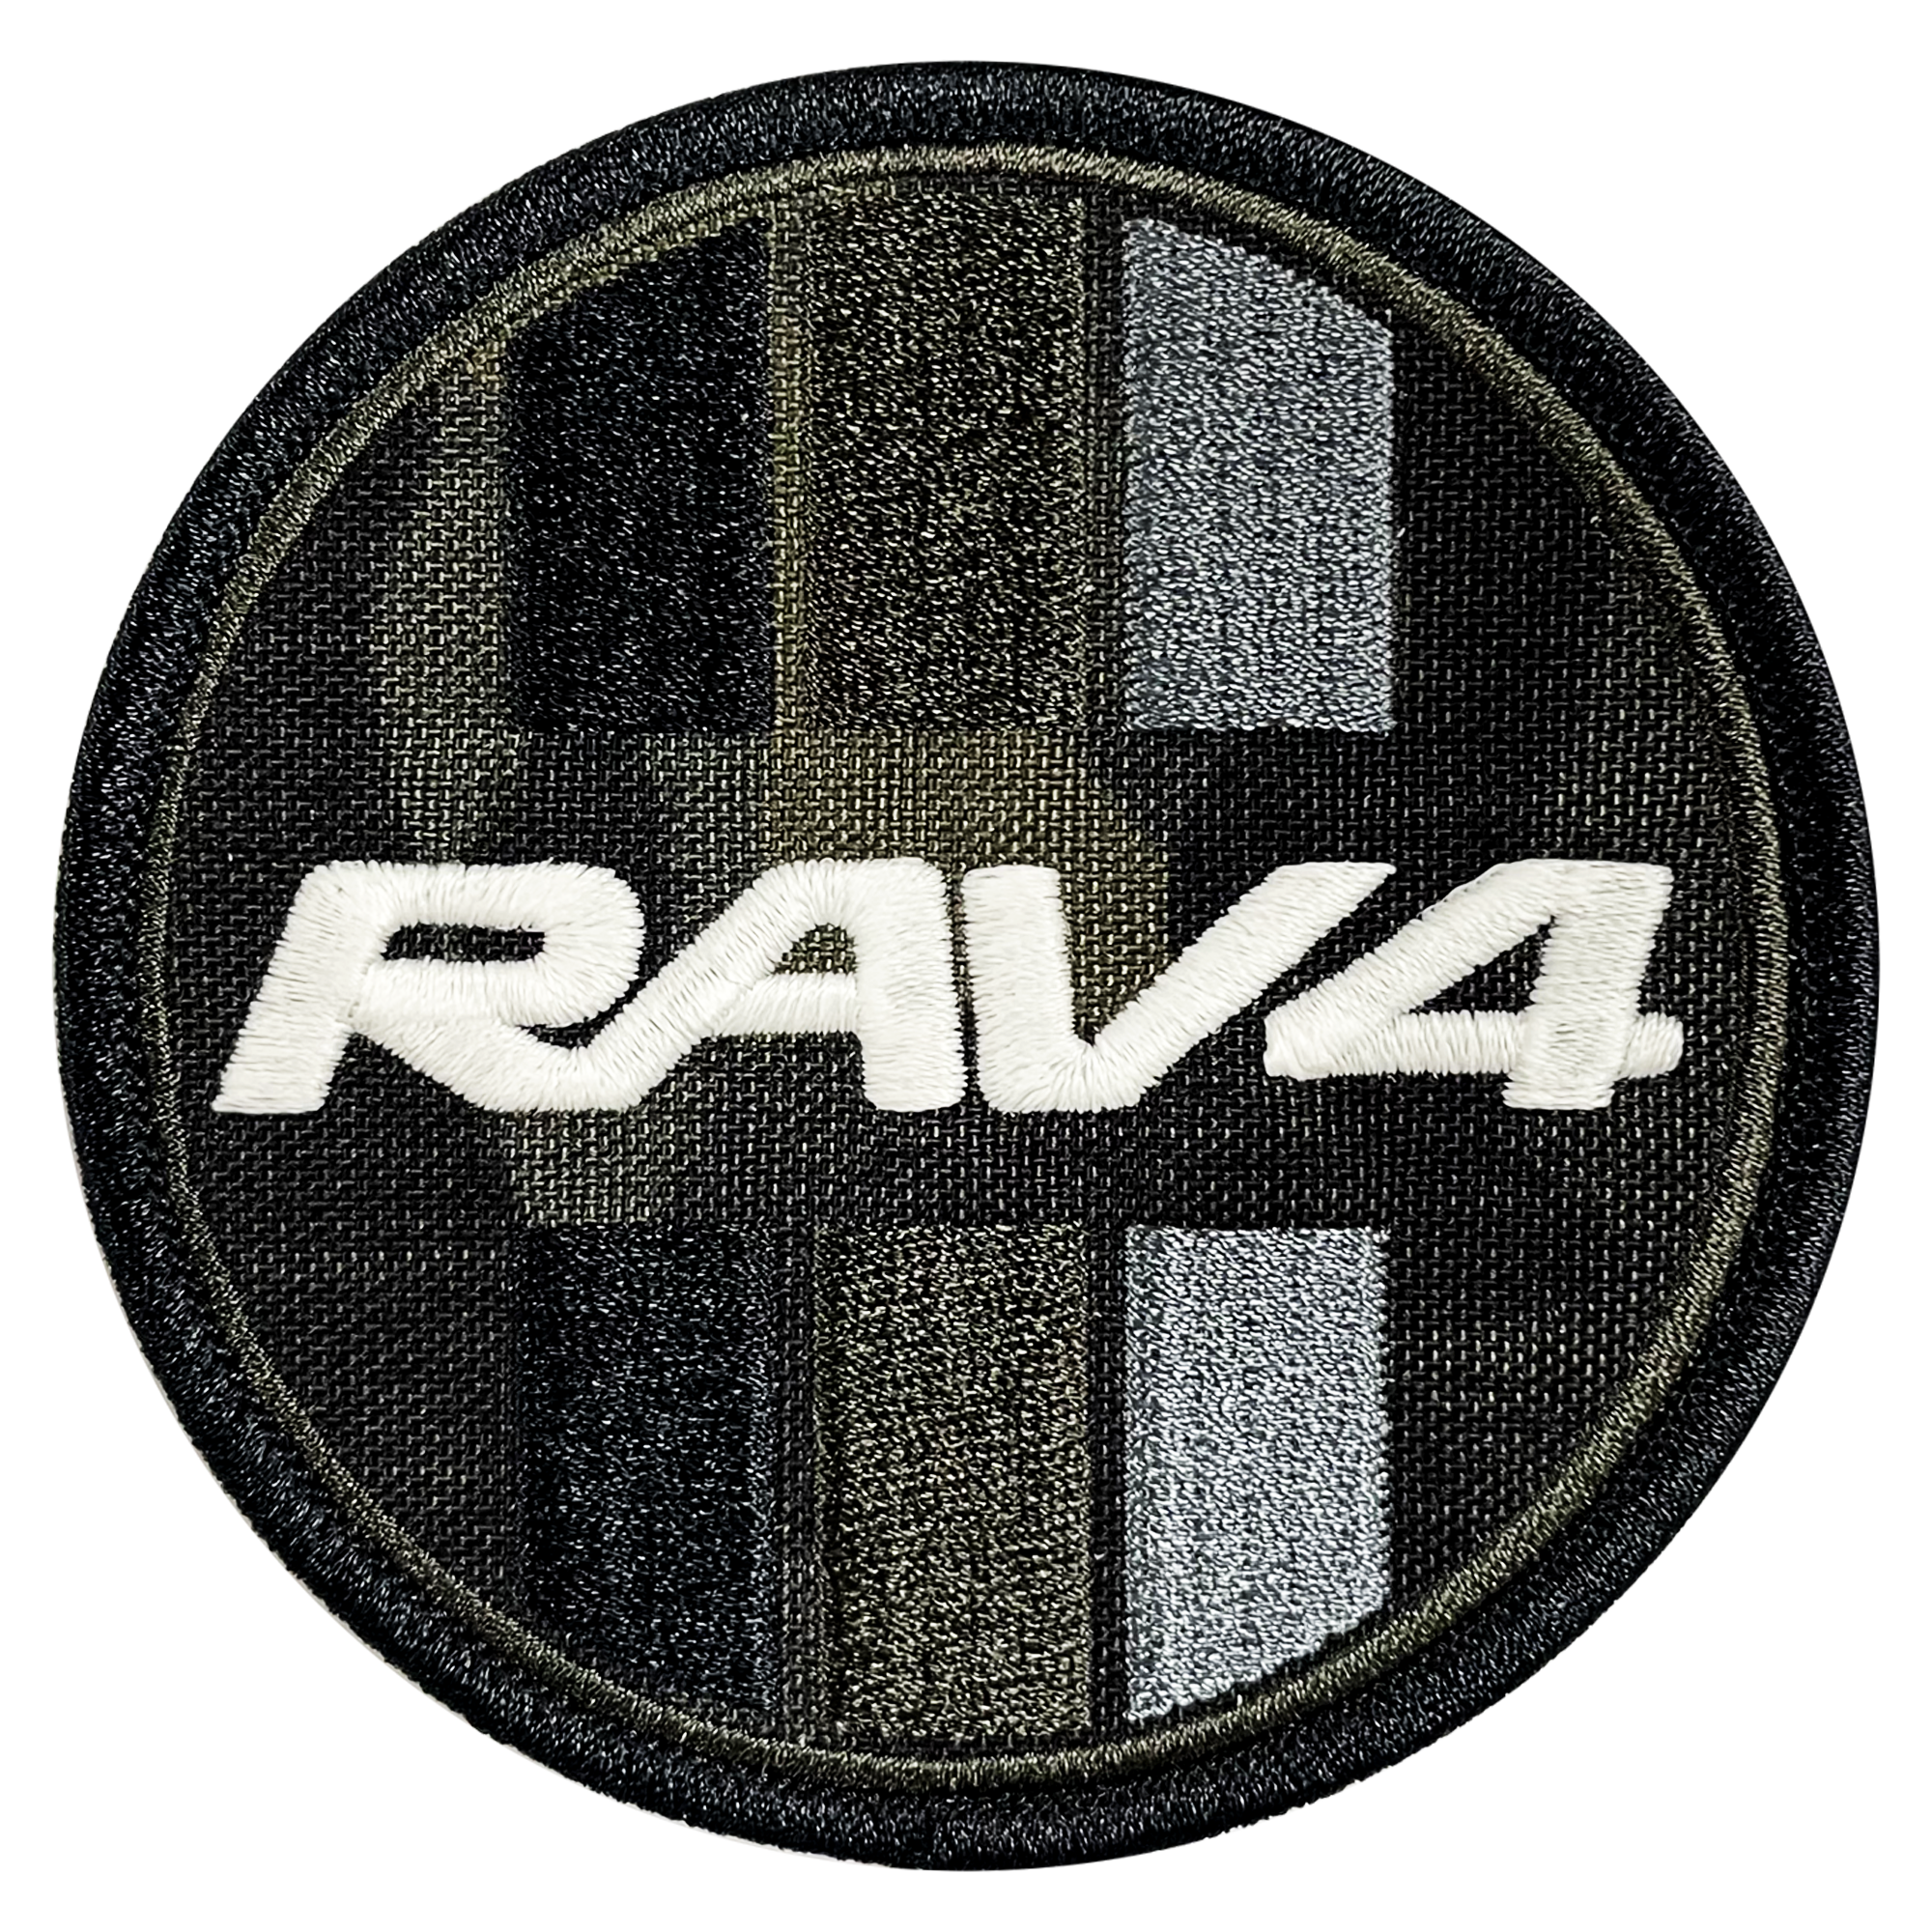 RAV4 Black Camo Circle Patch - GZila Designs